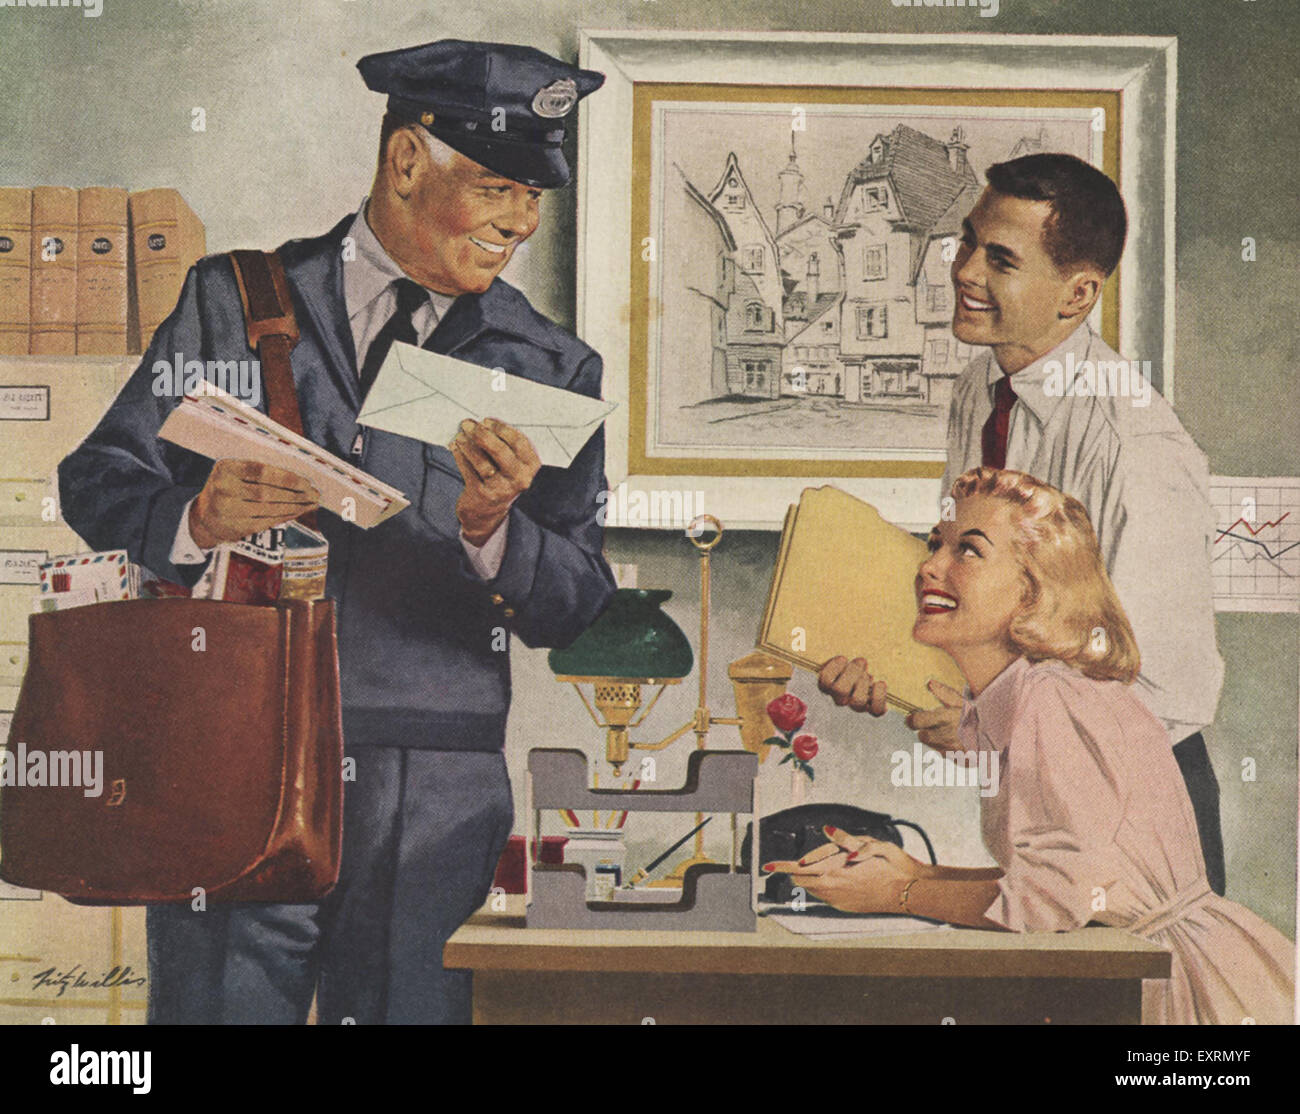 1950s USA Gilbert Quality Papers Magazine Advert Stock Photo